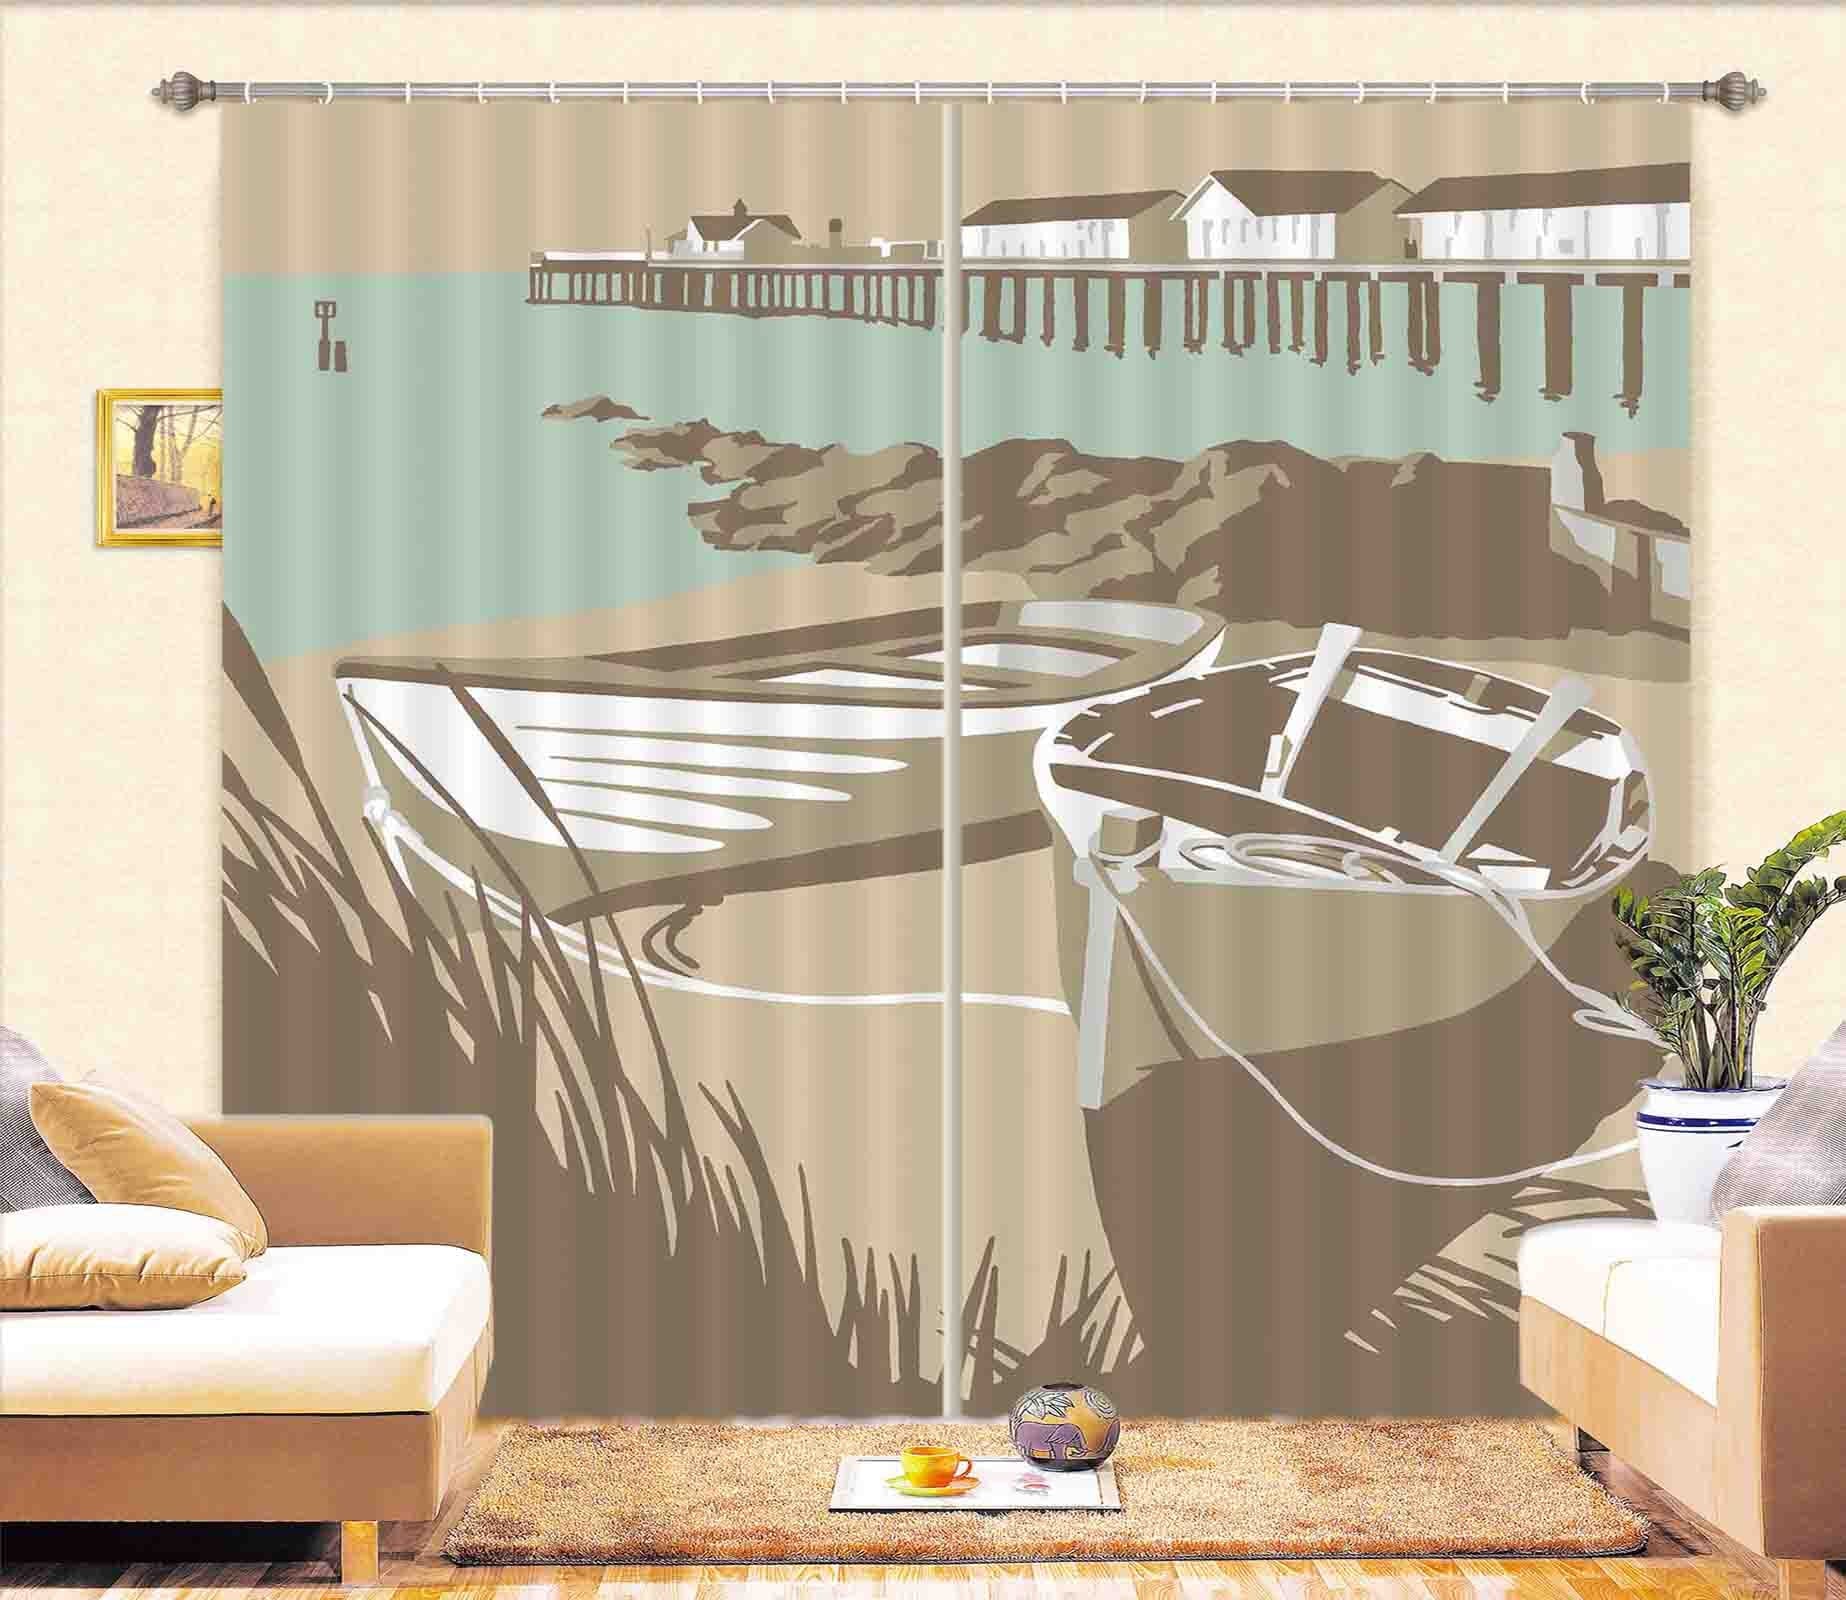 3D Southwold Boats Pier 149 Steve Read Curtain Curtains Drapes Curtains AJ Creativity Home 